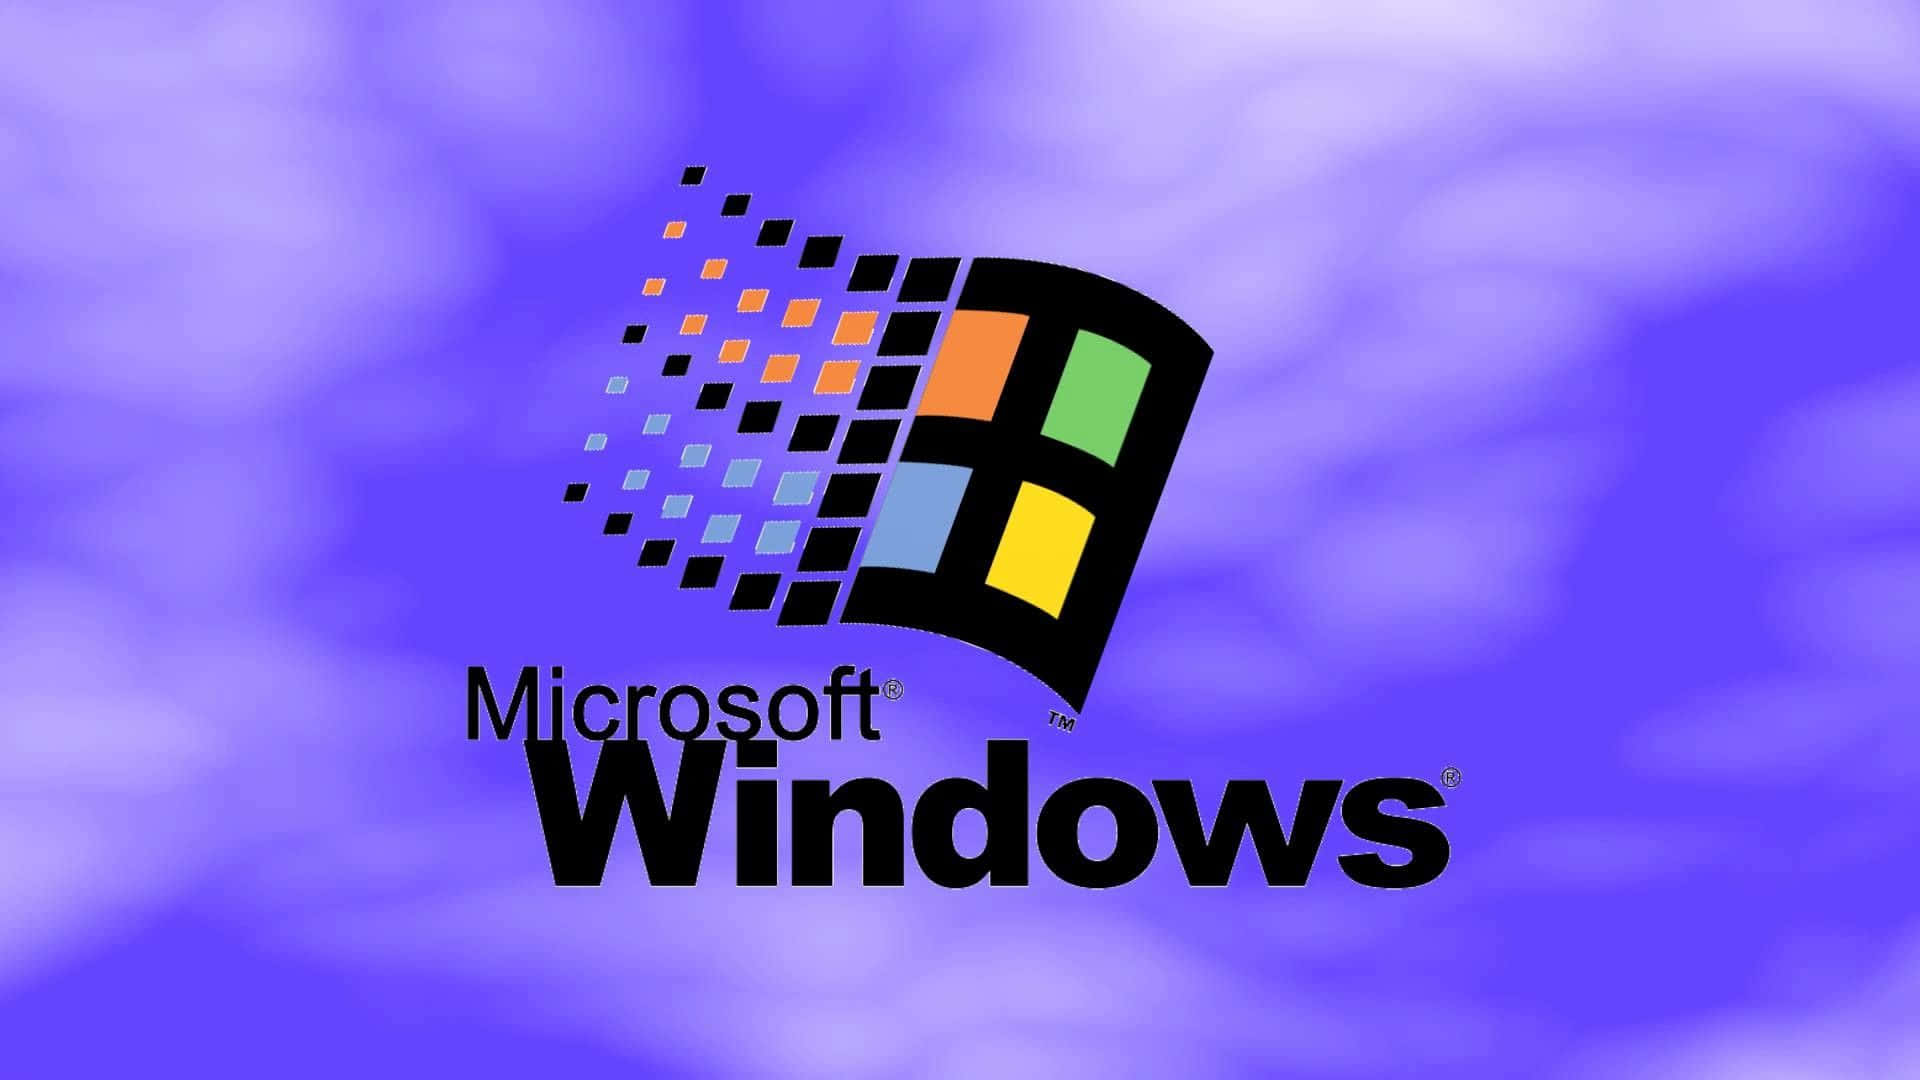 Microsoft Windows Logo On A Blue Background